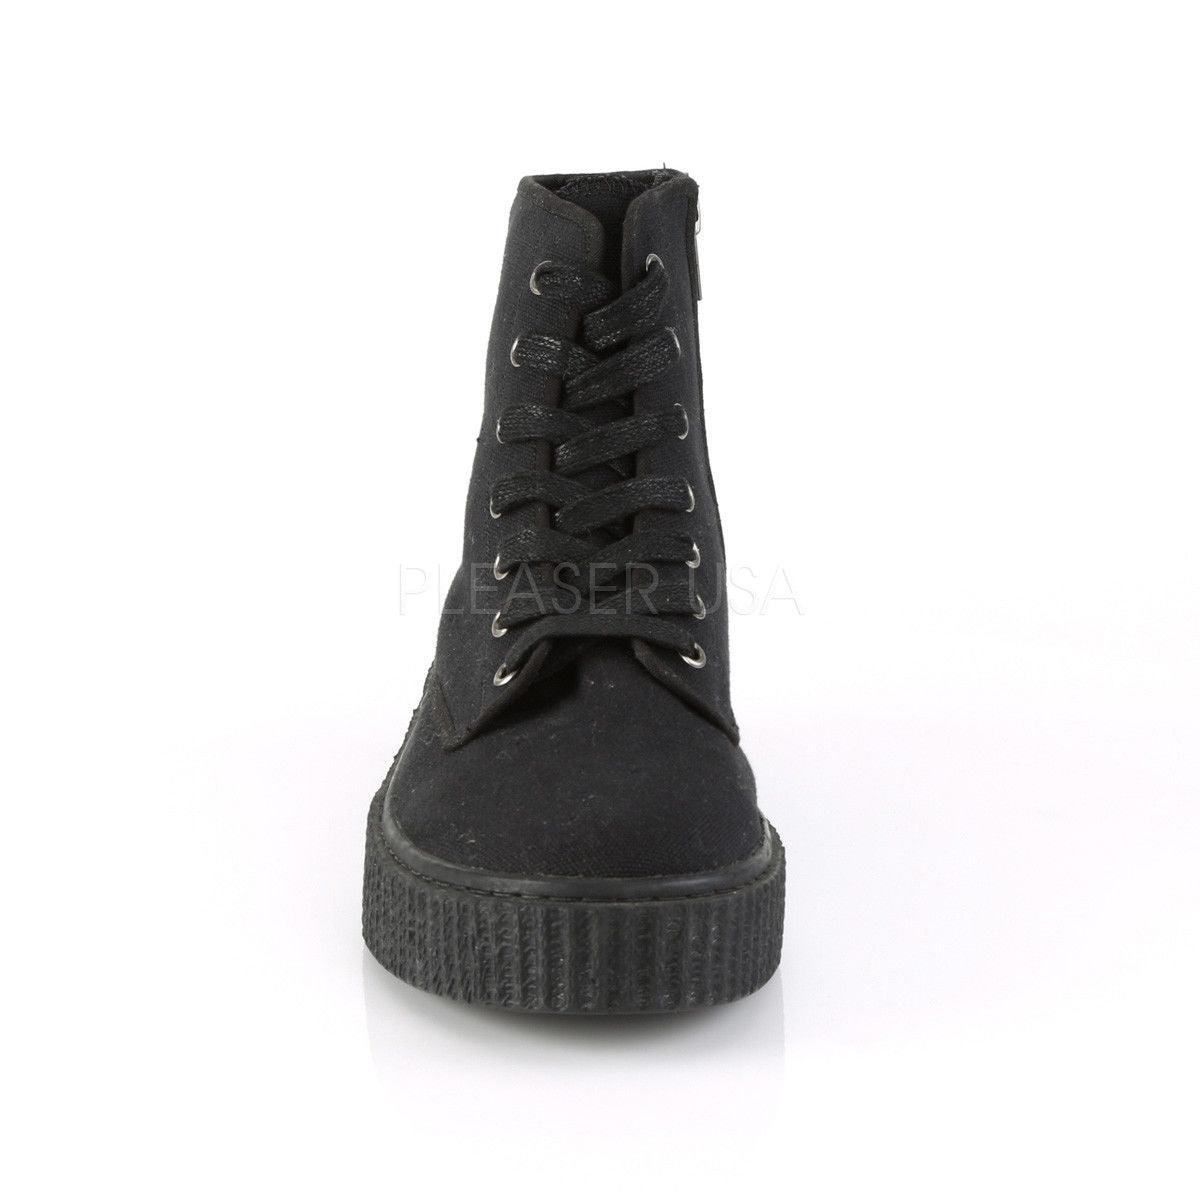 DEMONIA Sneeker-201 Men's Unisex Goth Rocker High Top Creeper Platform Sneakers - A Shoe Addiction